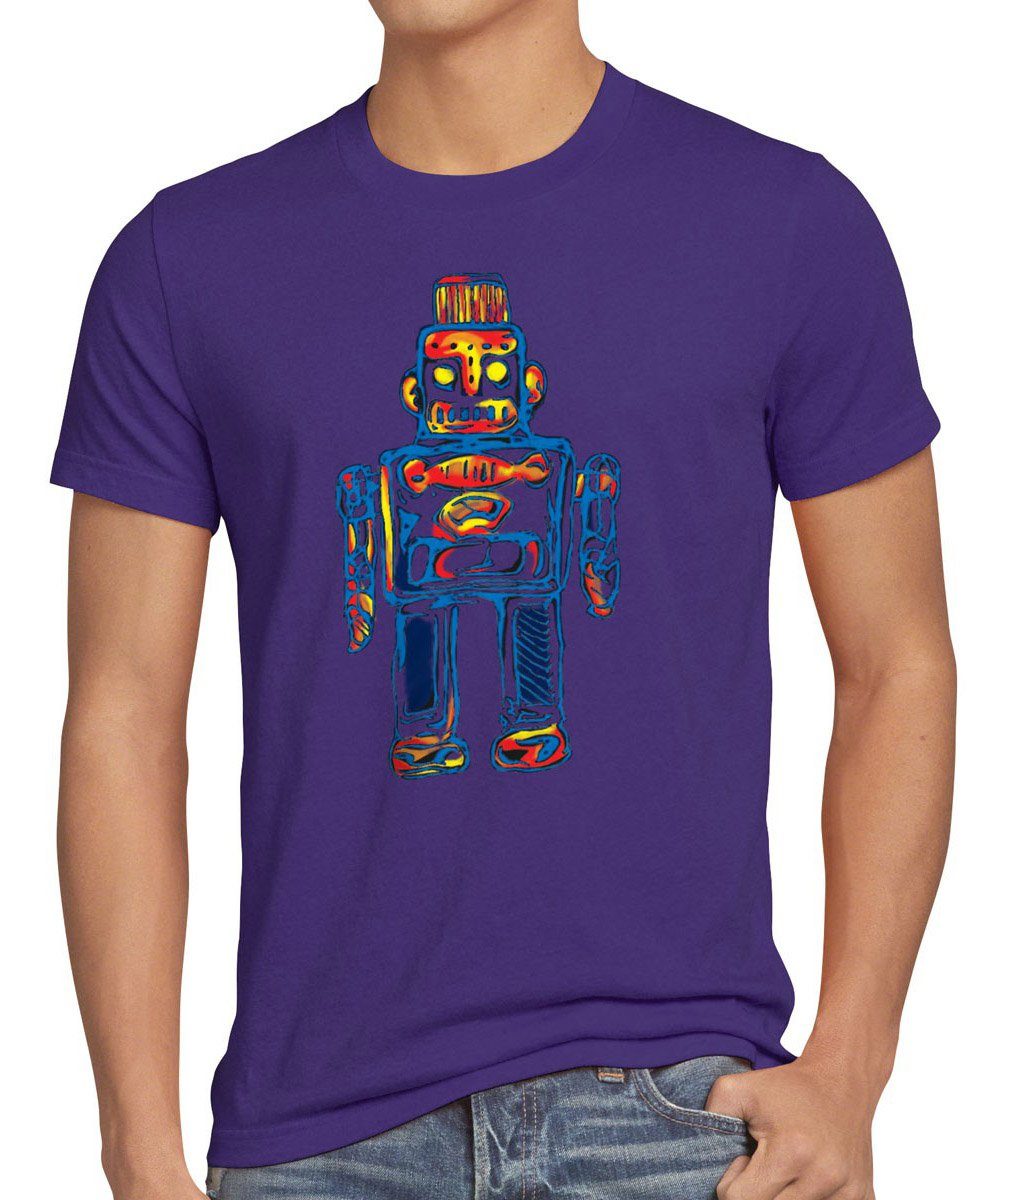 Print-Shirt tbbt Sheldon Toy cooper bang lila Robot Herren style3 Leonard spielzeug Roboter T-Shirt big